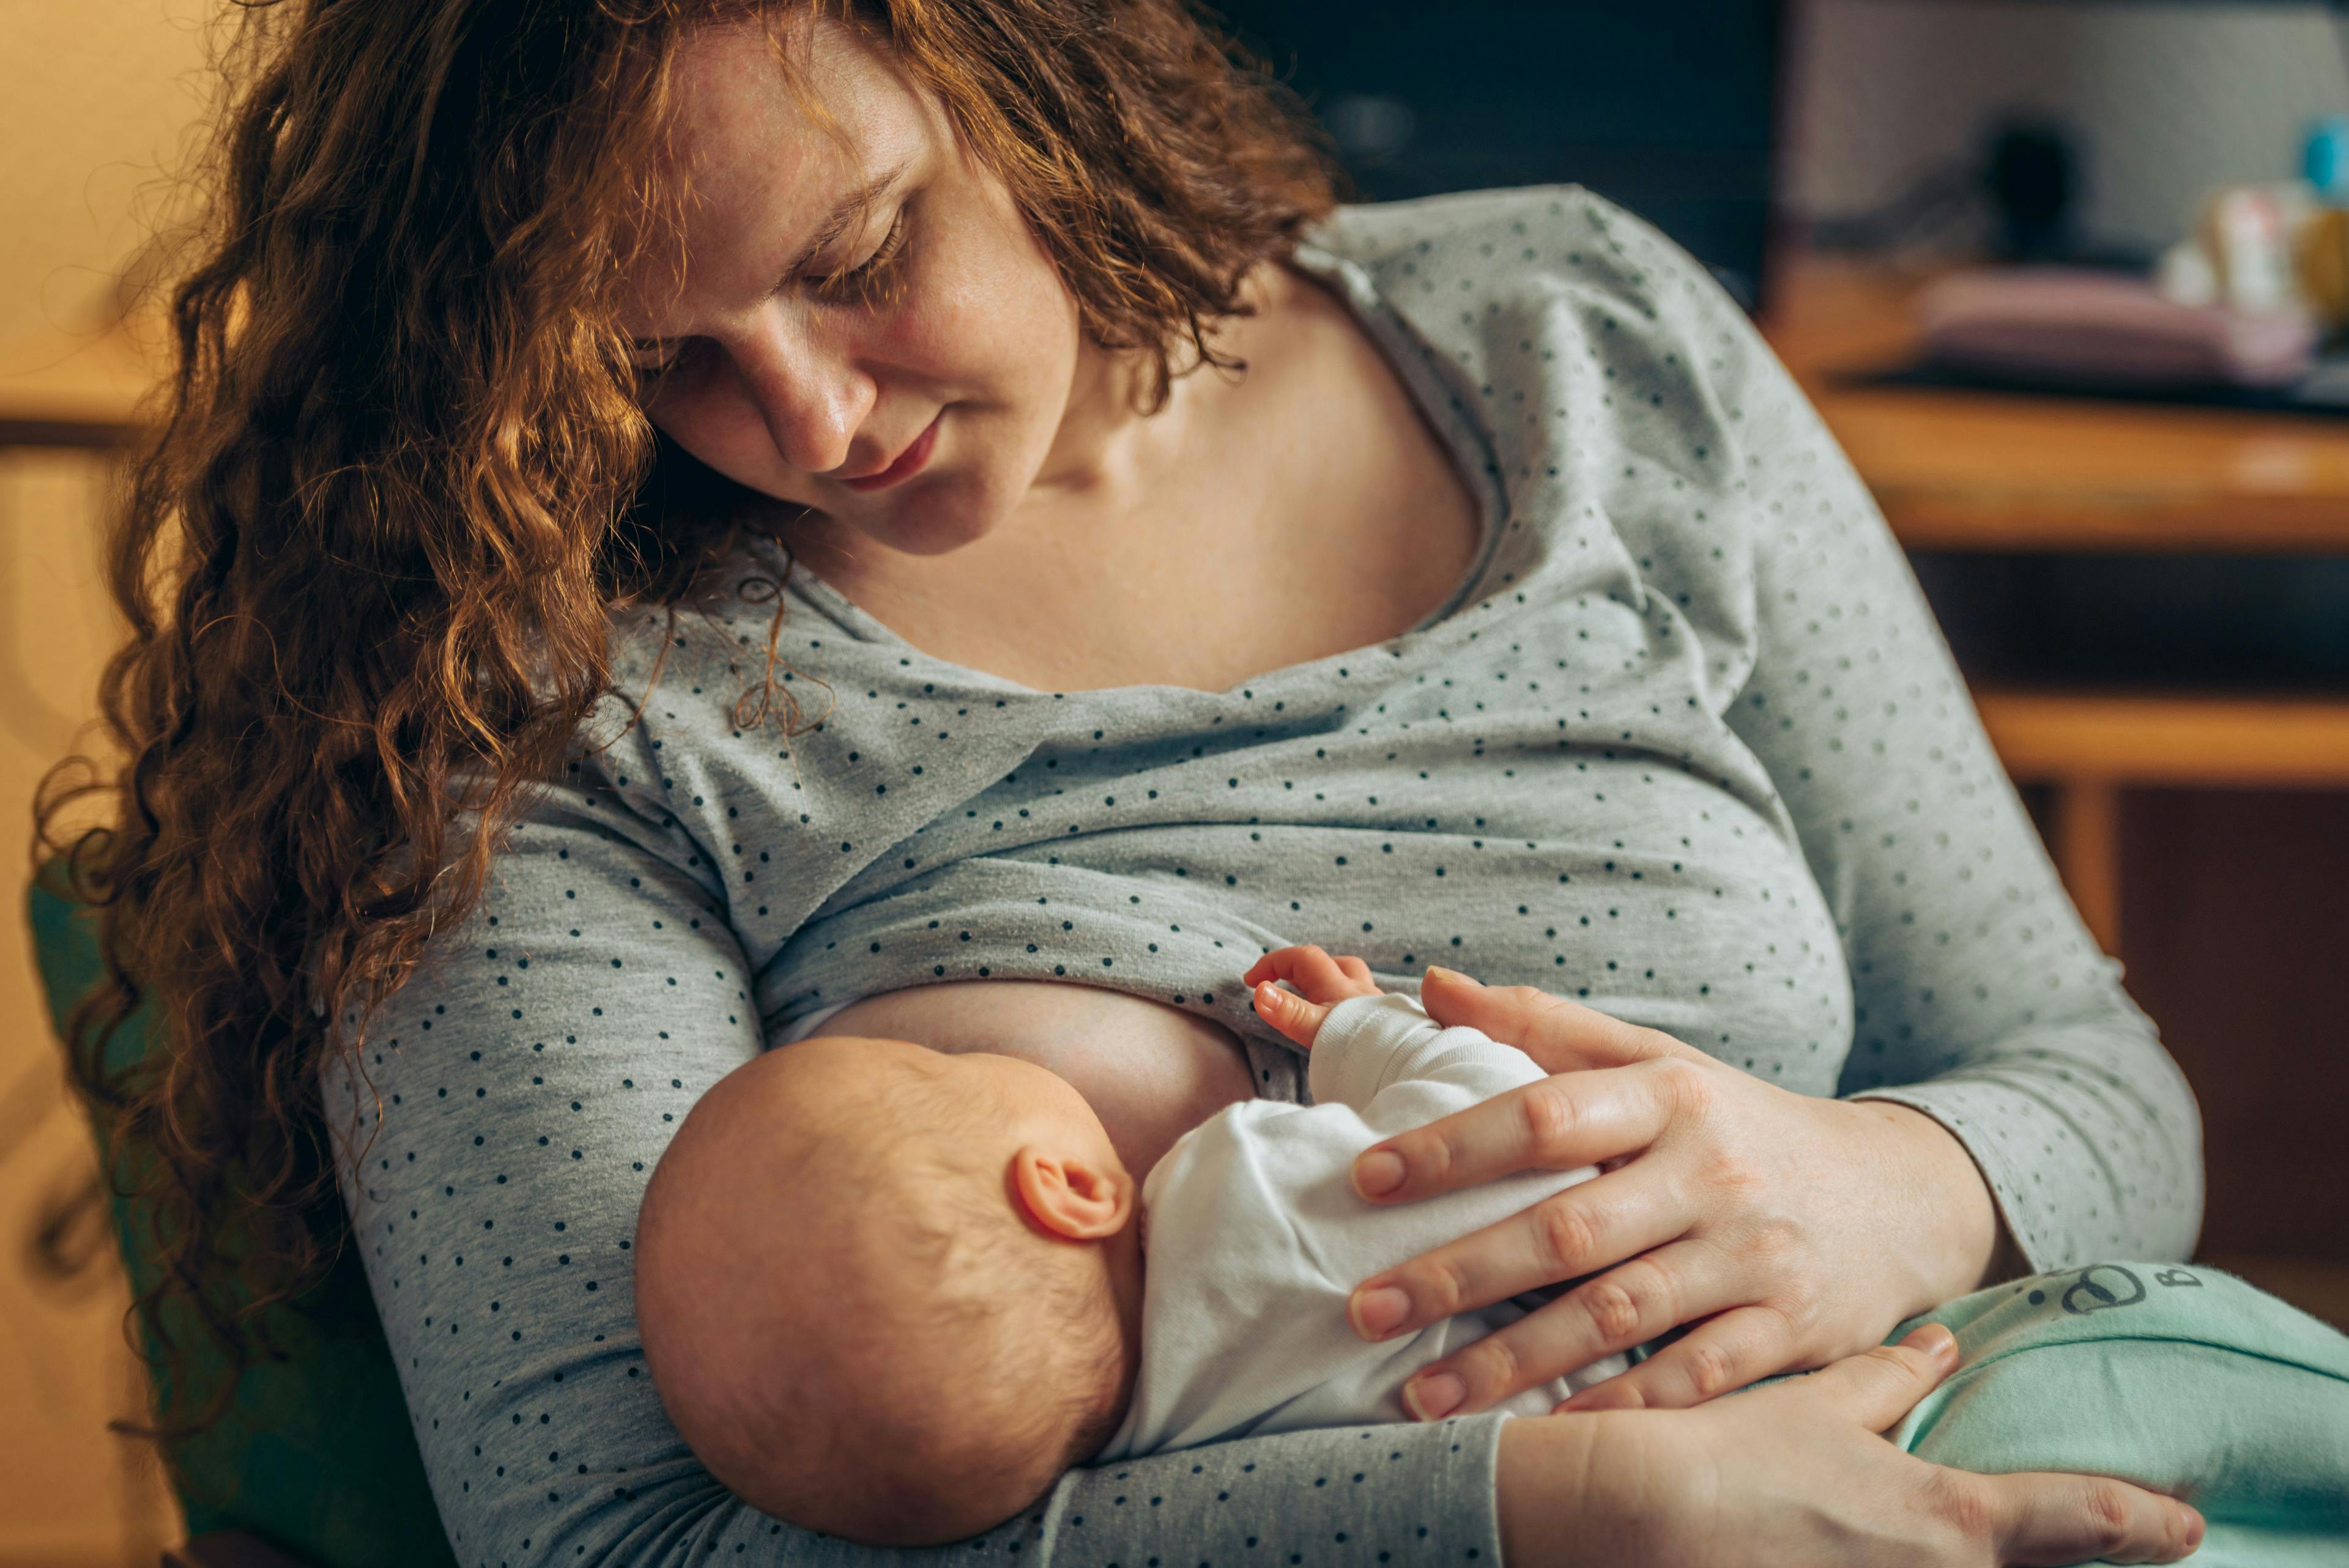 Breastfeeding and alcohol: Do they mix? 